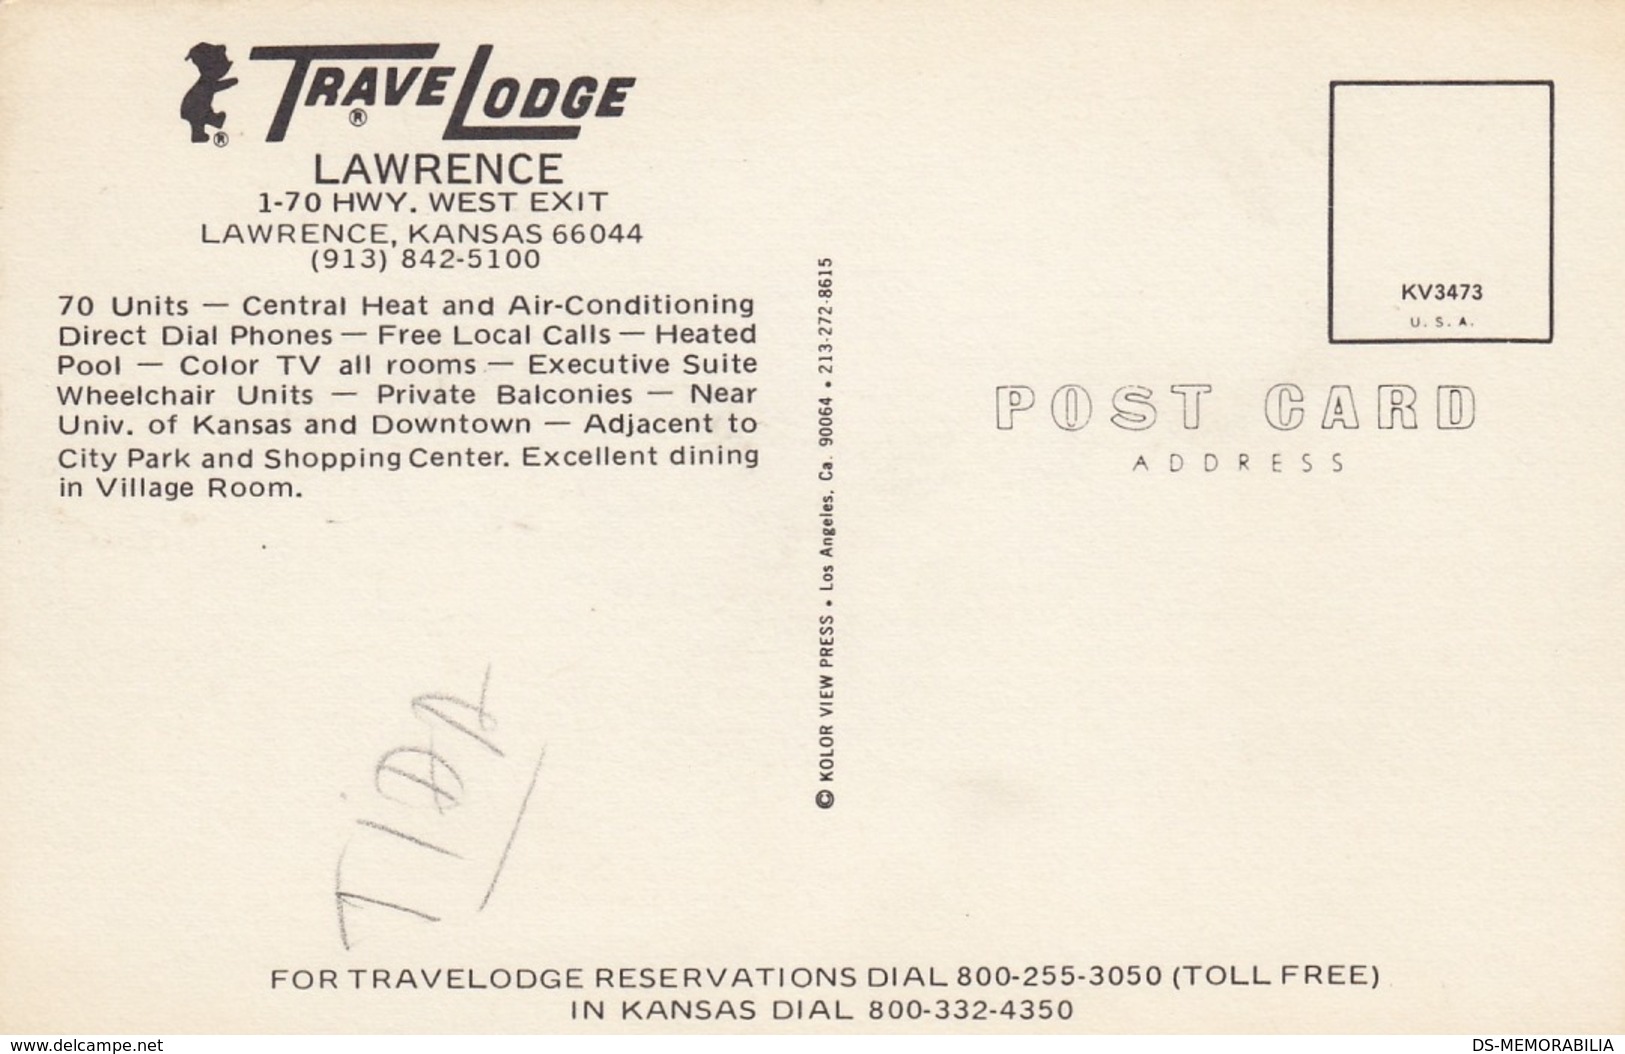 Lawrence Kansas - Travel Lodge - Lawrence